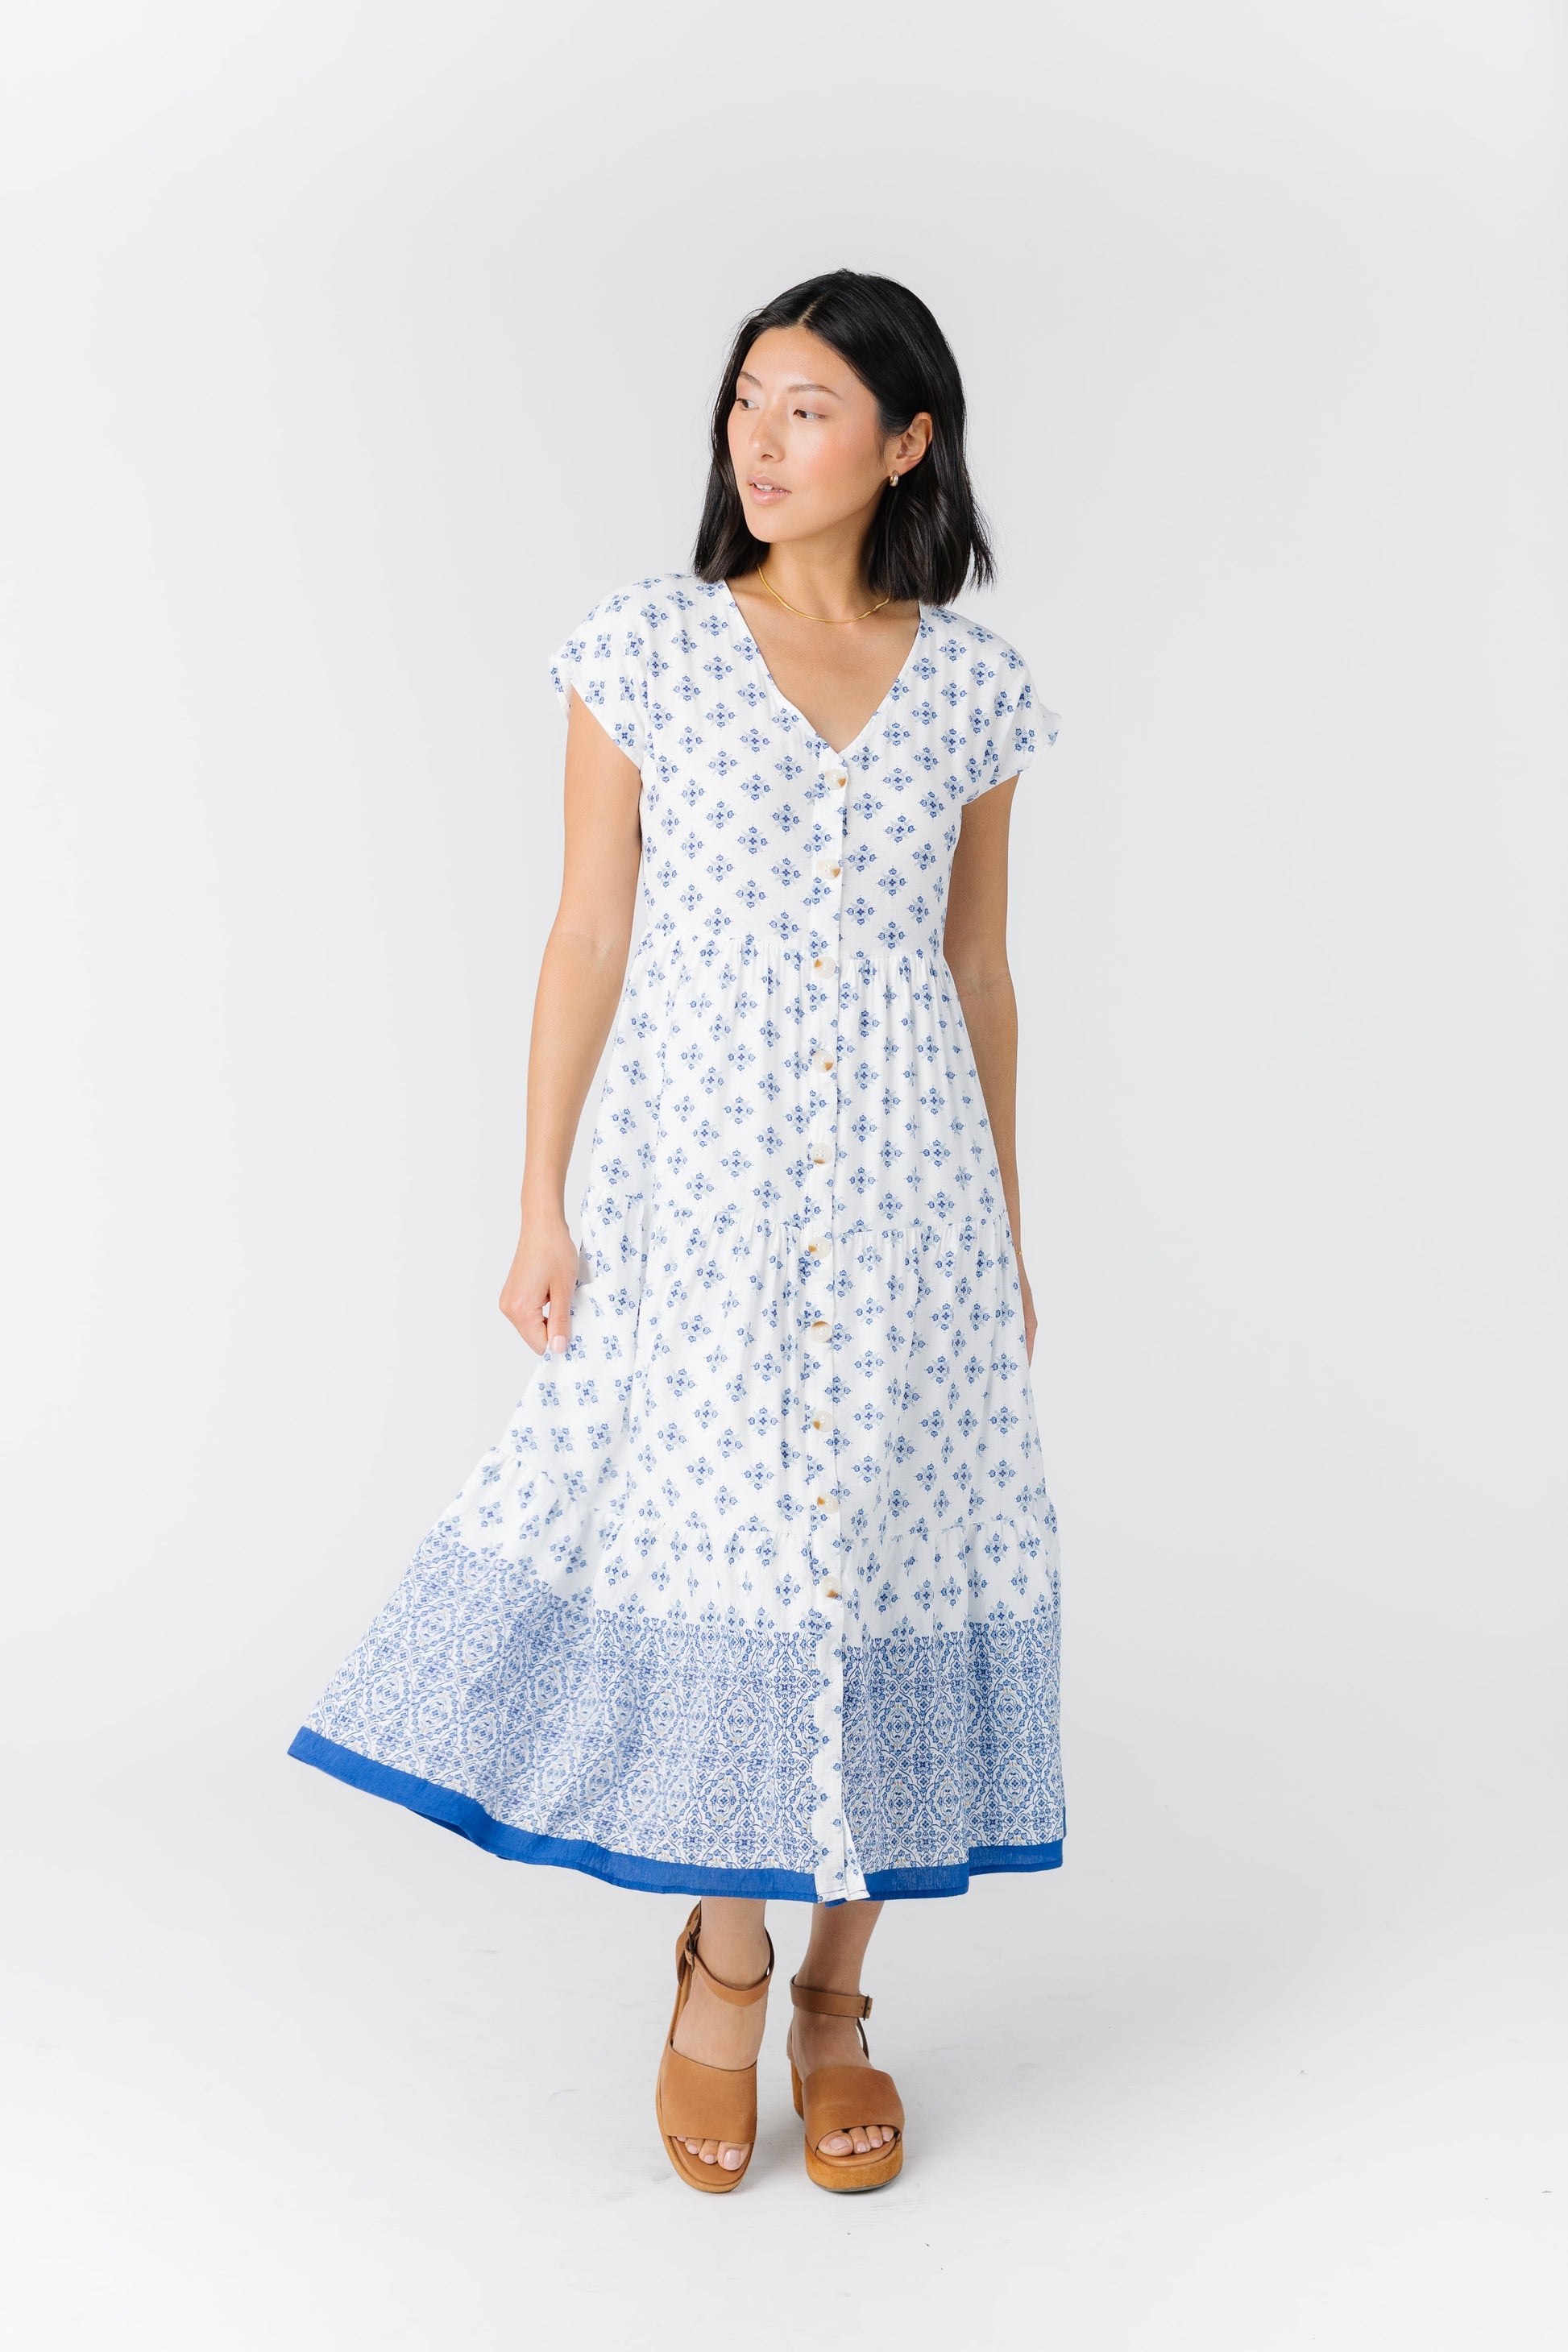 Harper Dress WOMEN'S DRESS Blu Pepper 